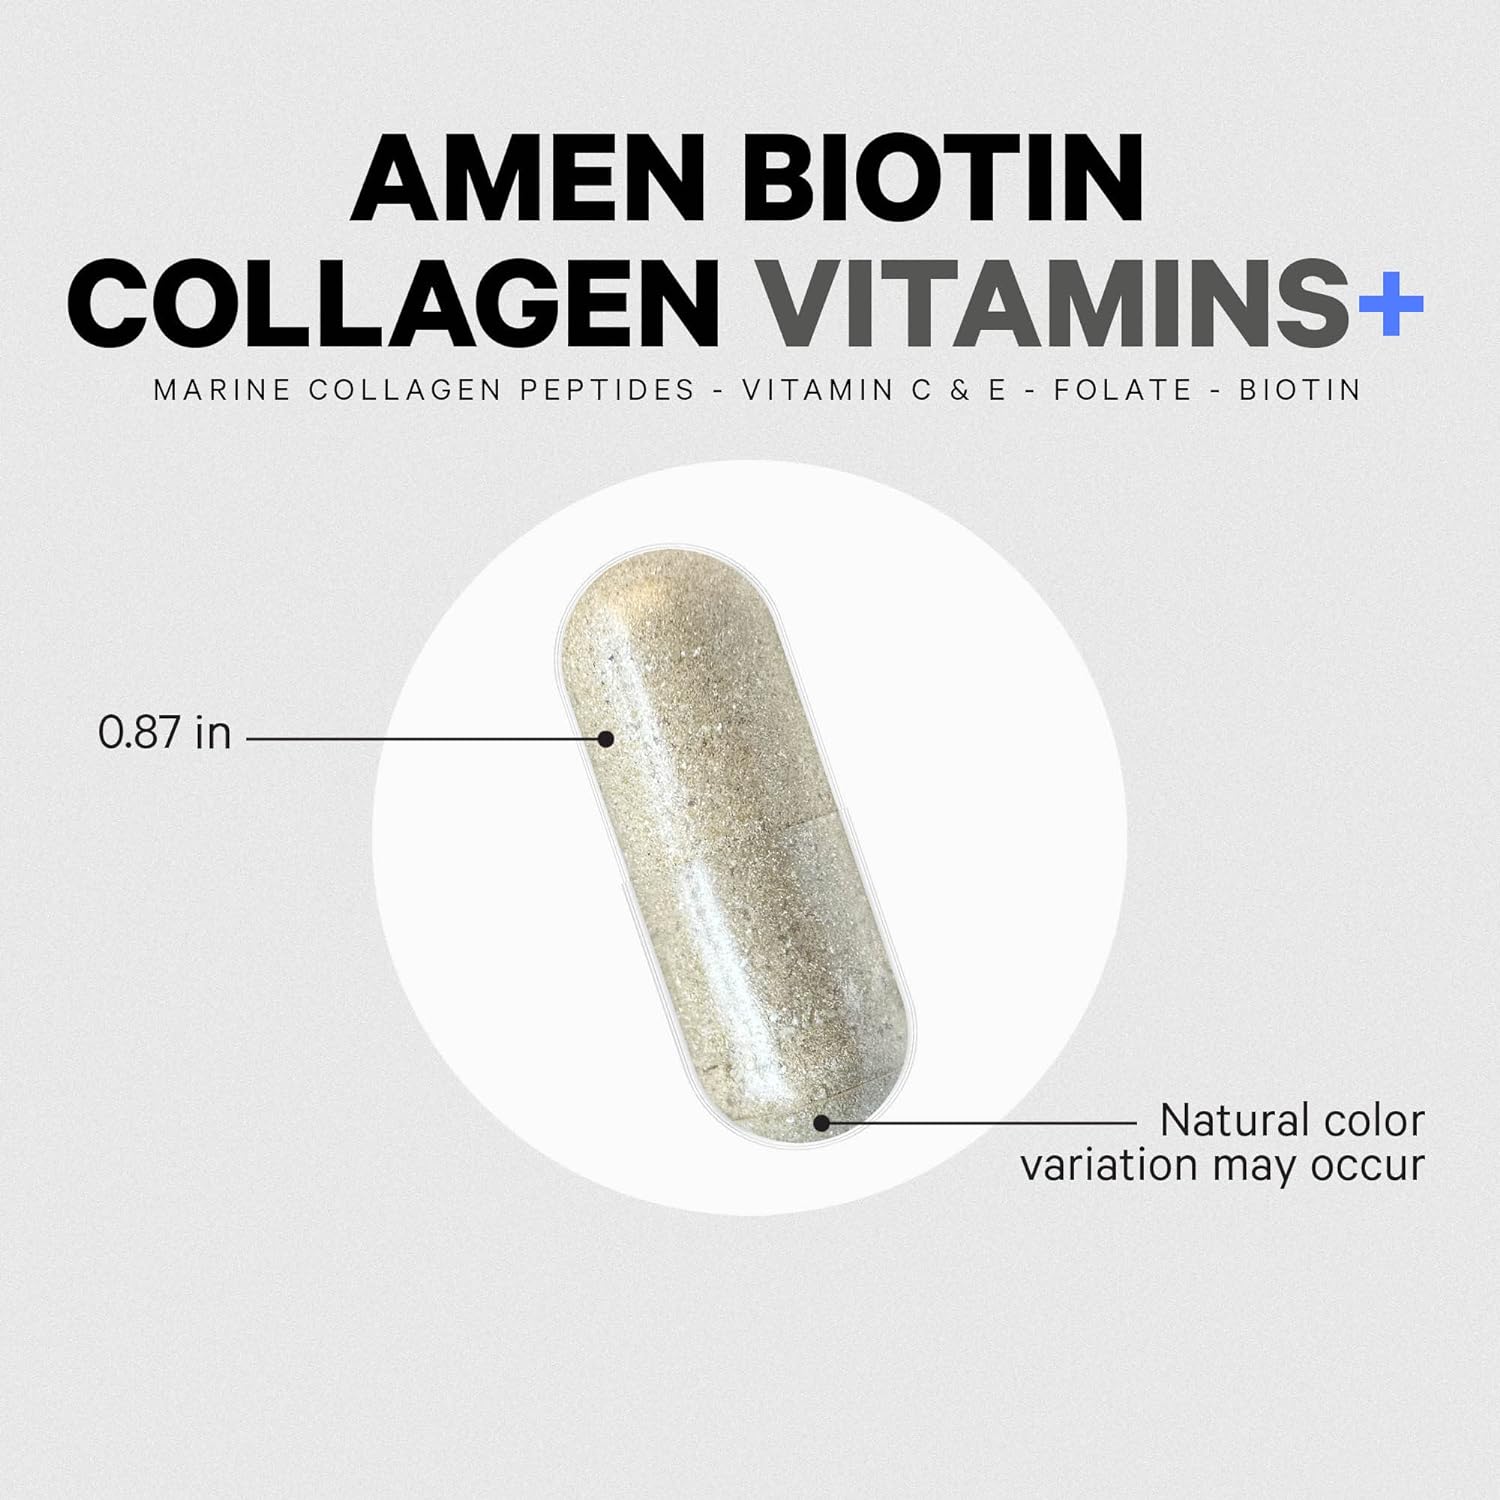 Amen Biotin Collagen Vitamins+ Advanced Hair, Skin, Nail & Immunity Support - 10,000mcg Biotin, Collagen, Keratin, Vitamins C & E, Folate, Hyaluronic Acid, MSM - 3-Month Supply, Non-GMO - 90 Capsules : Health & Household